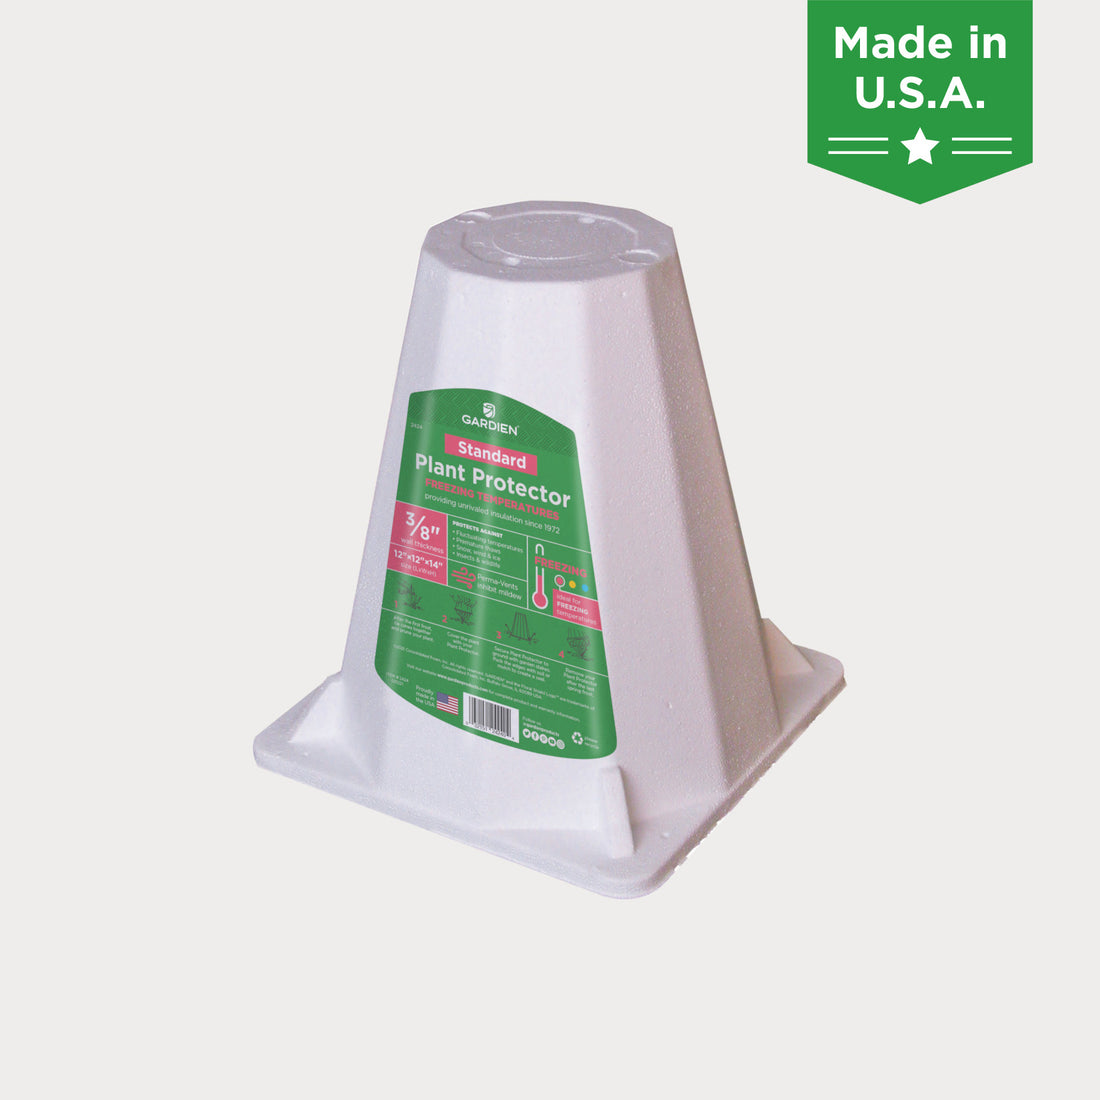 2424 standard plant styrofoam protector for freezing tempertures